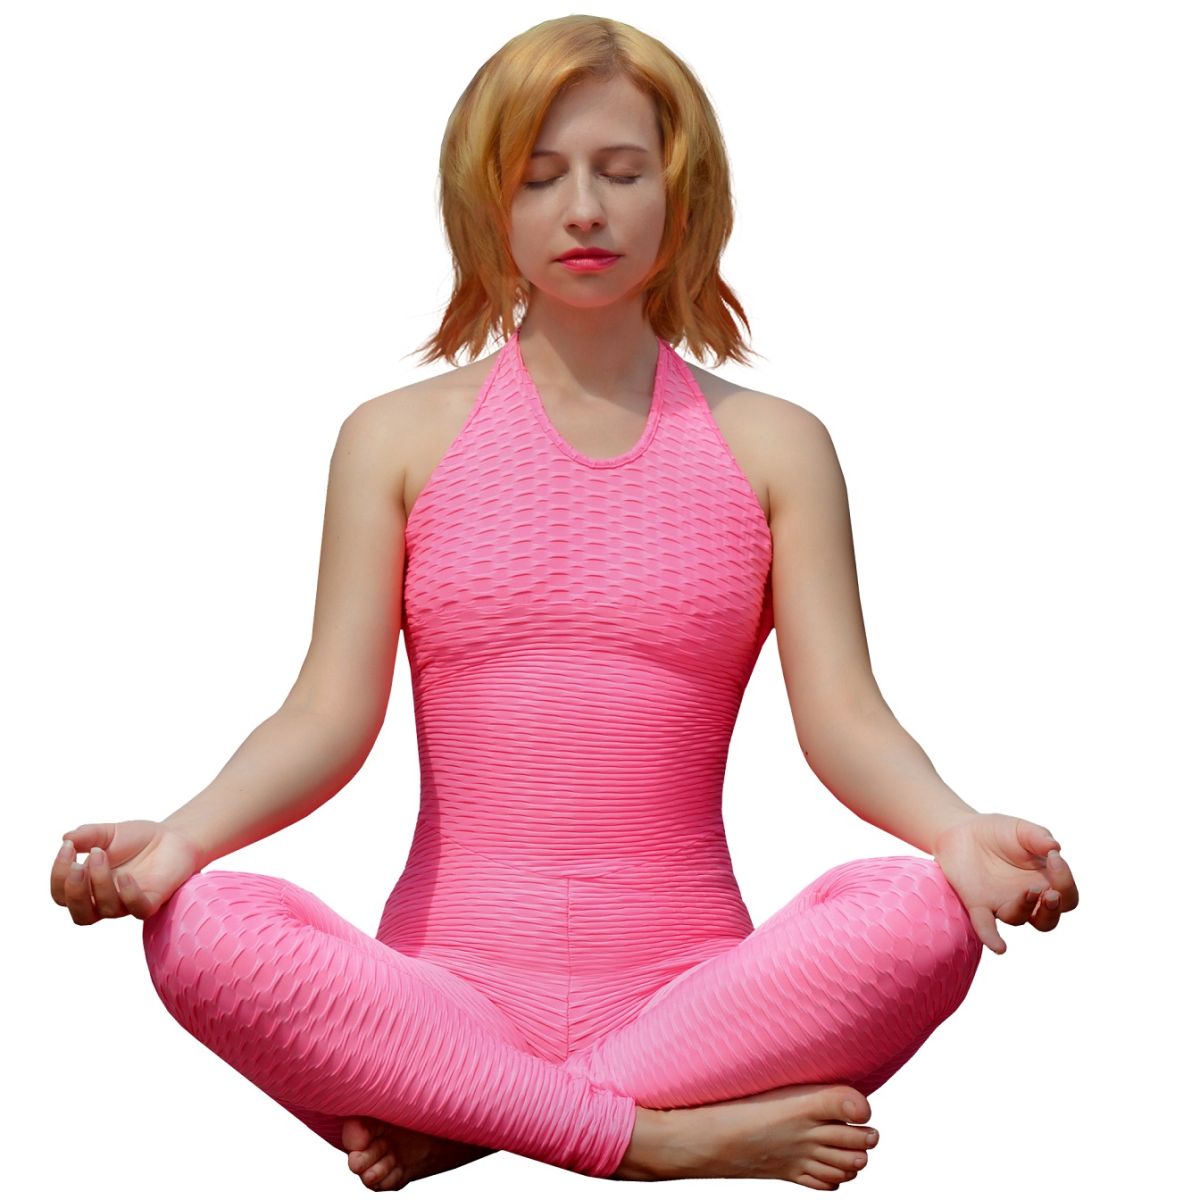 Yoga Studio, Reduce Stress